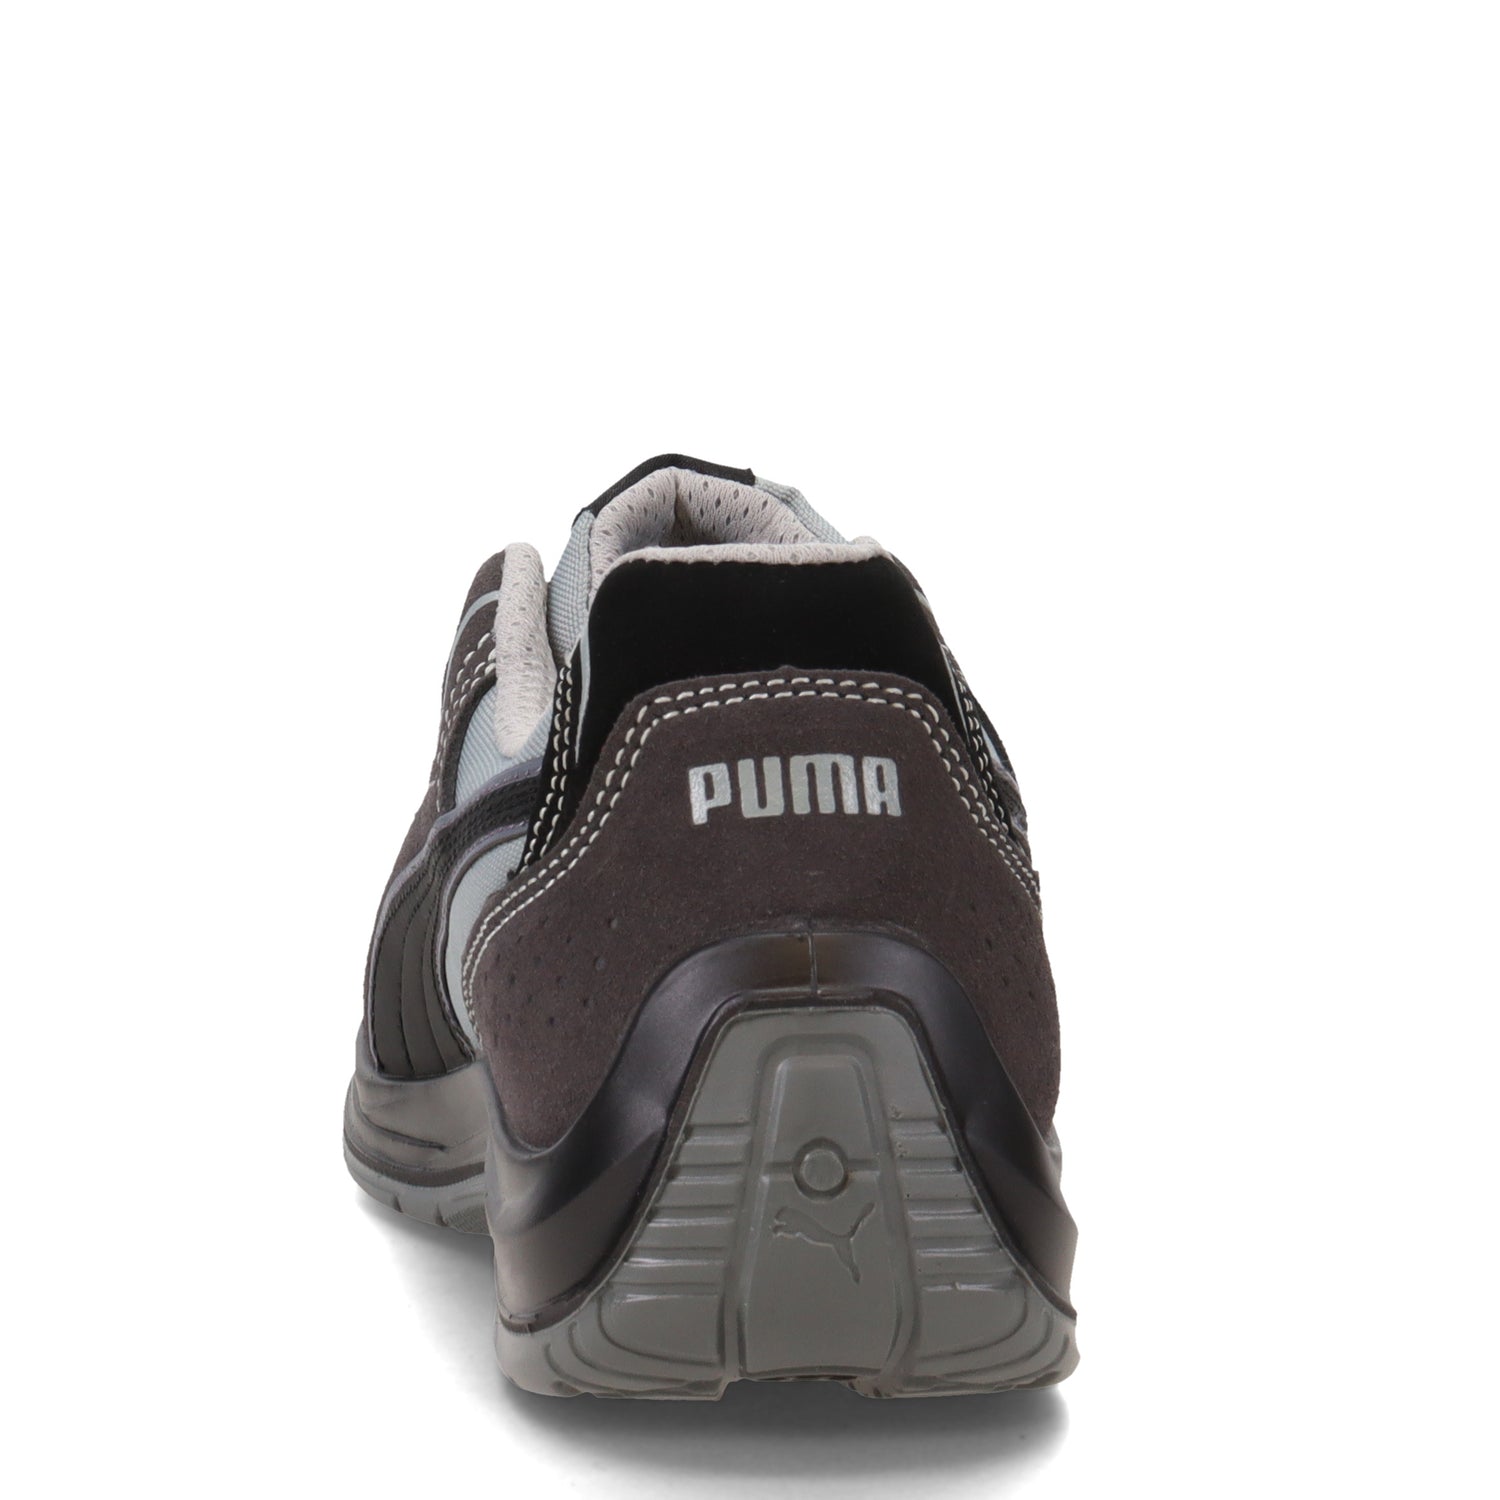 Peltz Shoes  Men's PUMA Safety Touring Low Work Shoe GRAY 643465